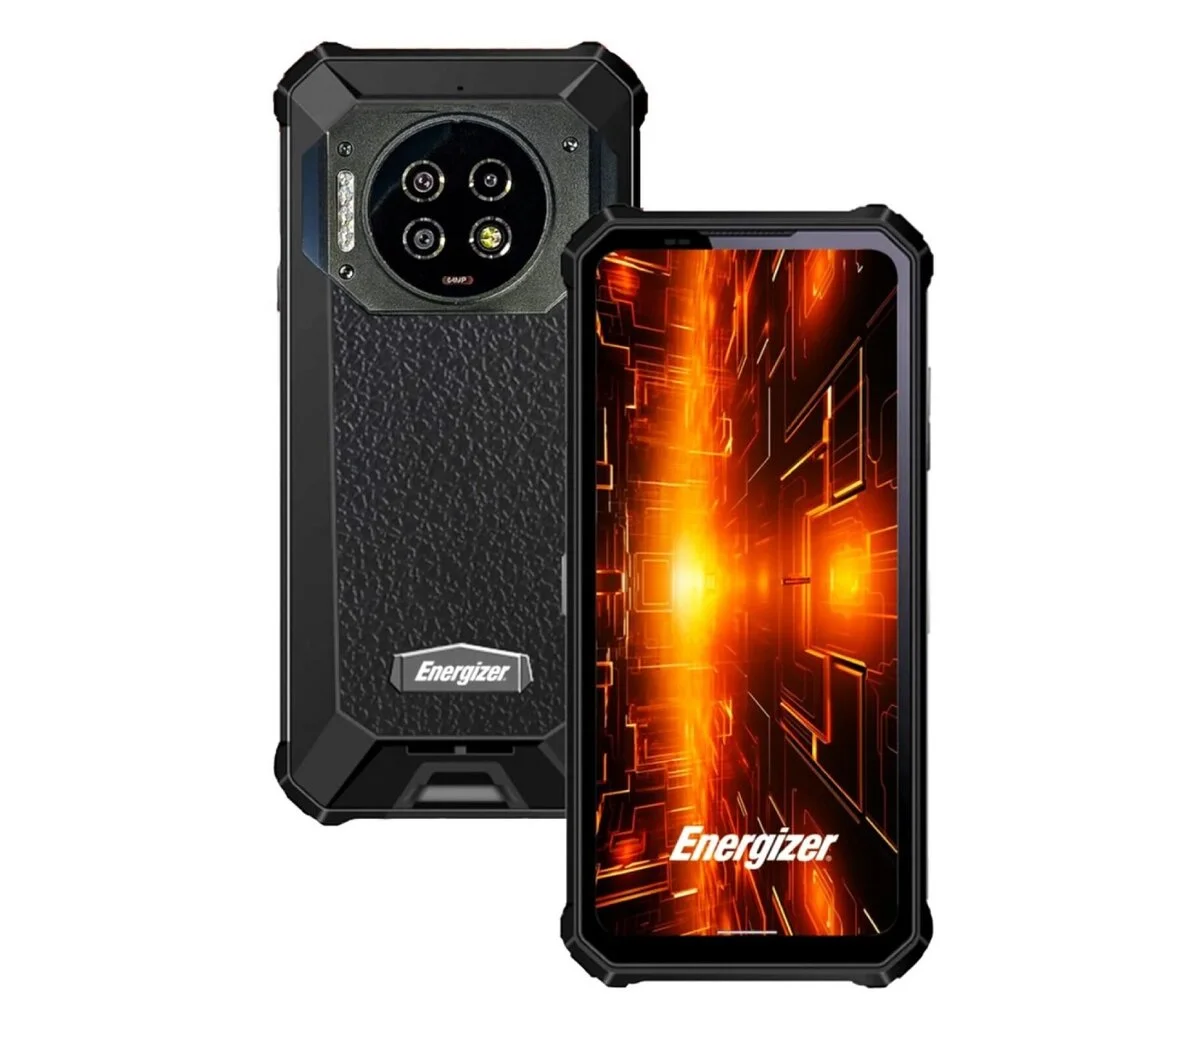 Energizer Hard Case P28K smartphone presented